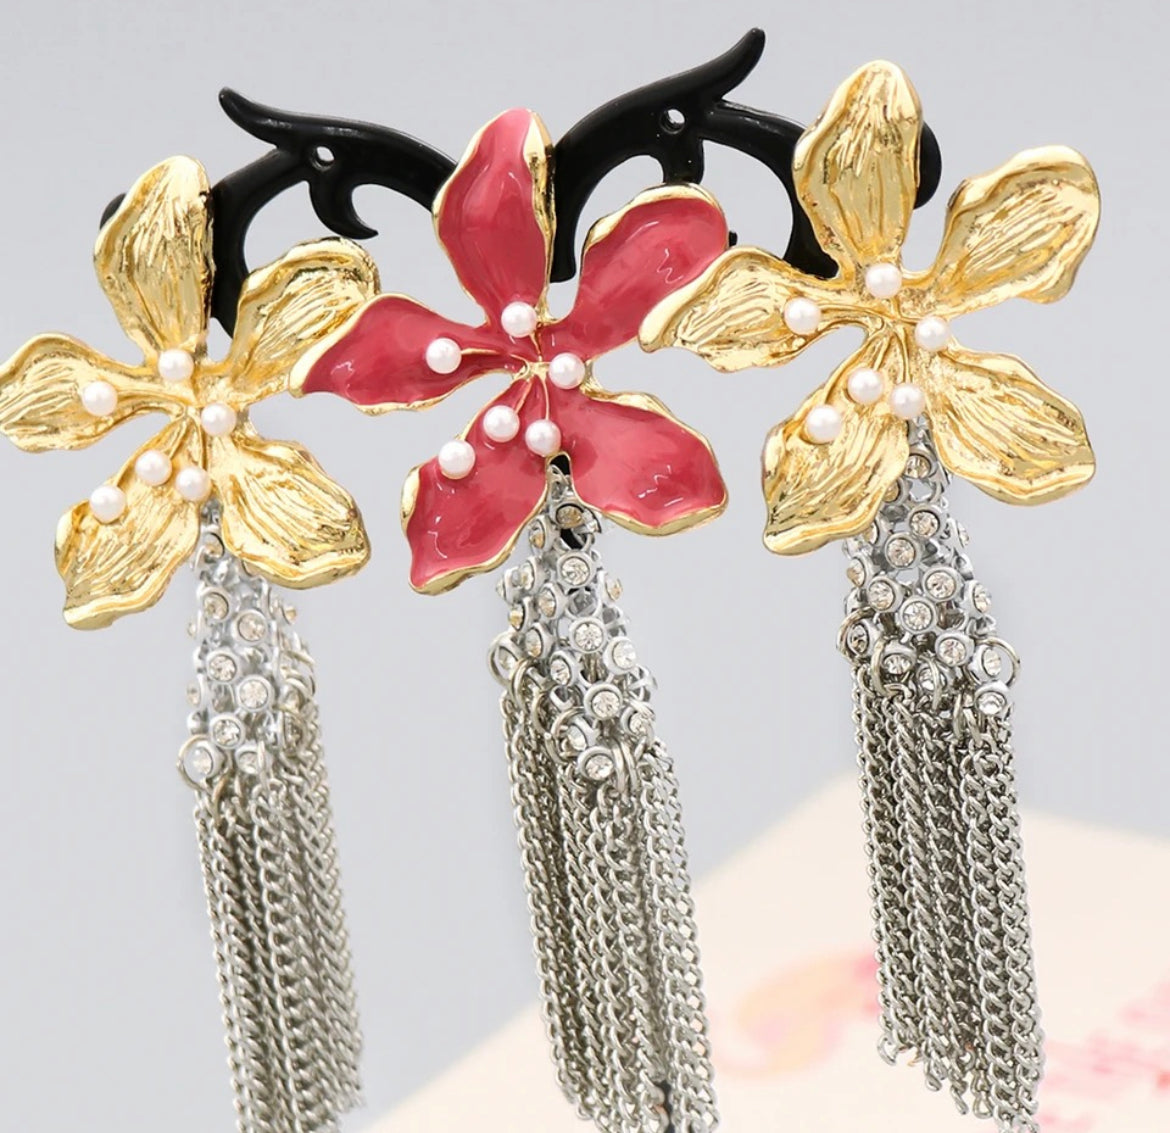 Flower tassel earrings